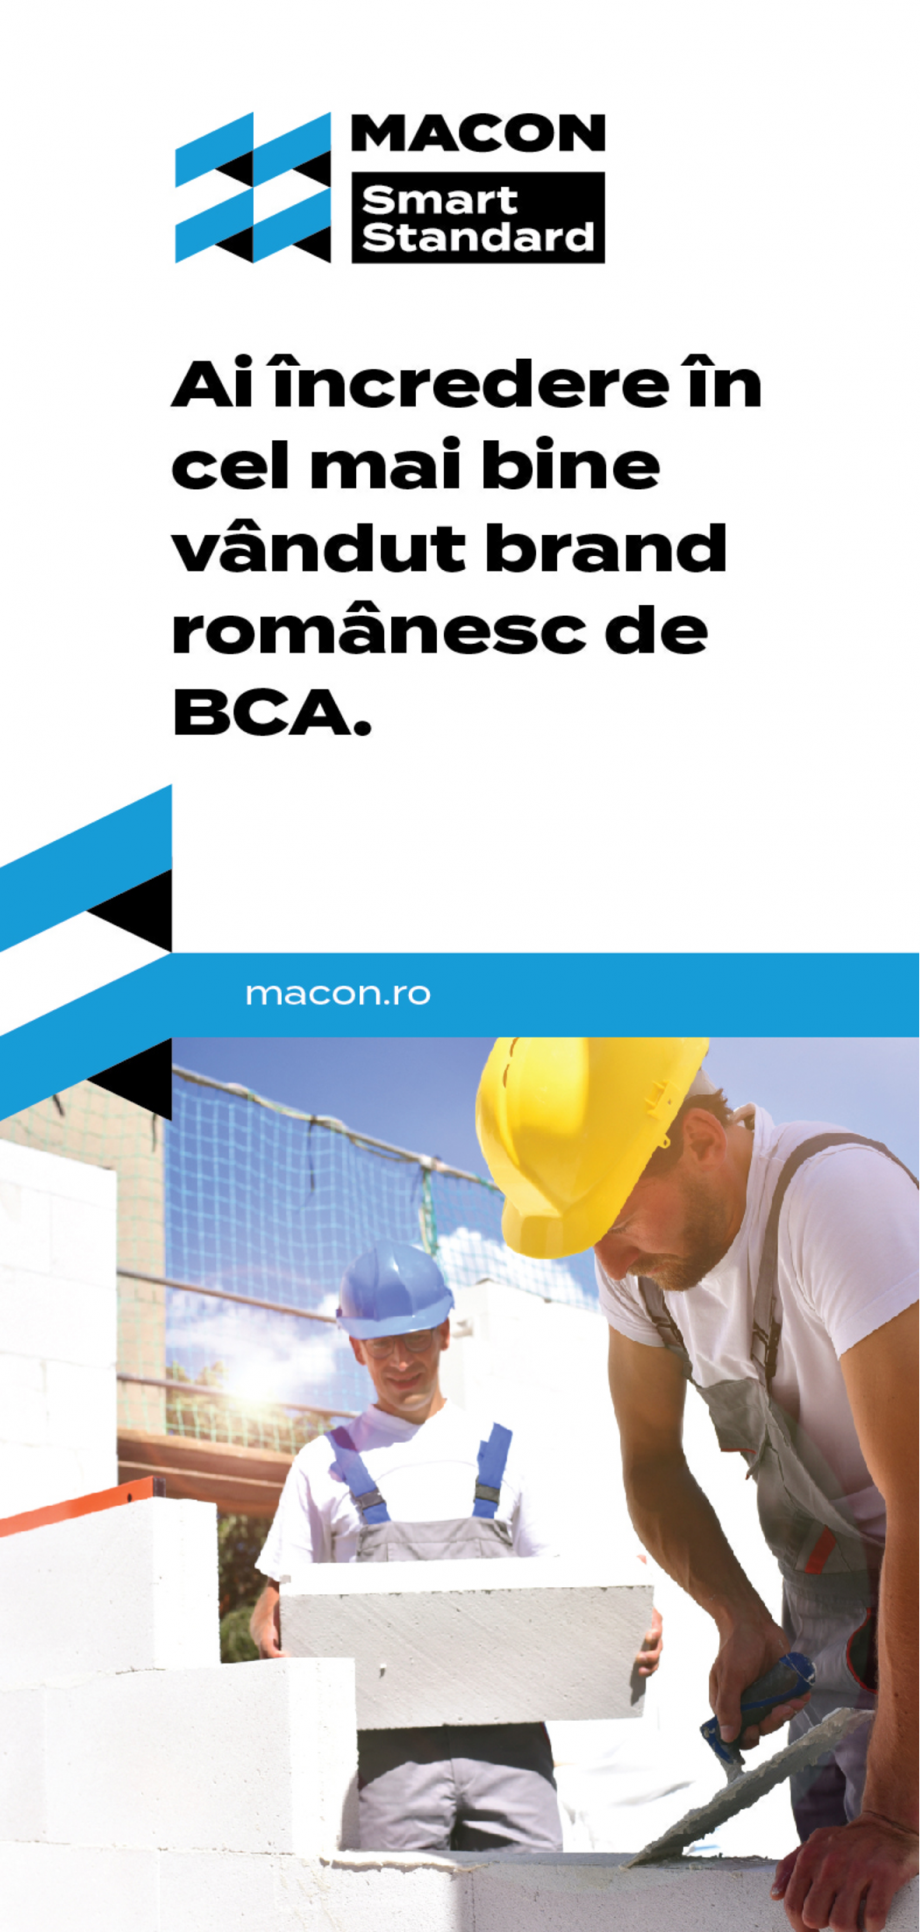 Pagina 1 - MACON Smart Standard - Ai incredere in cel mai bine vandut brand romanesc de BCA MACON...